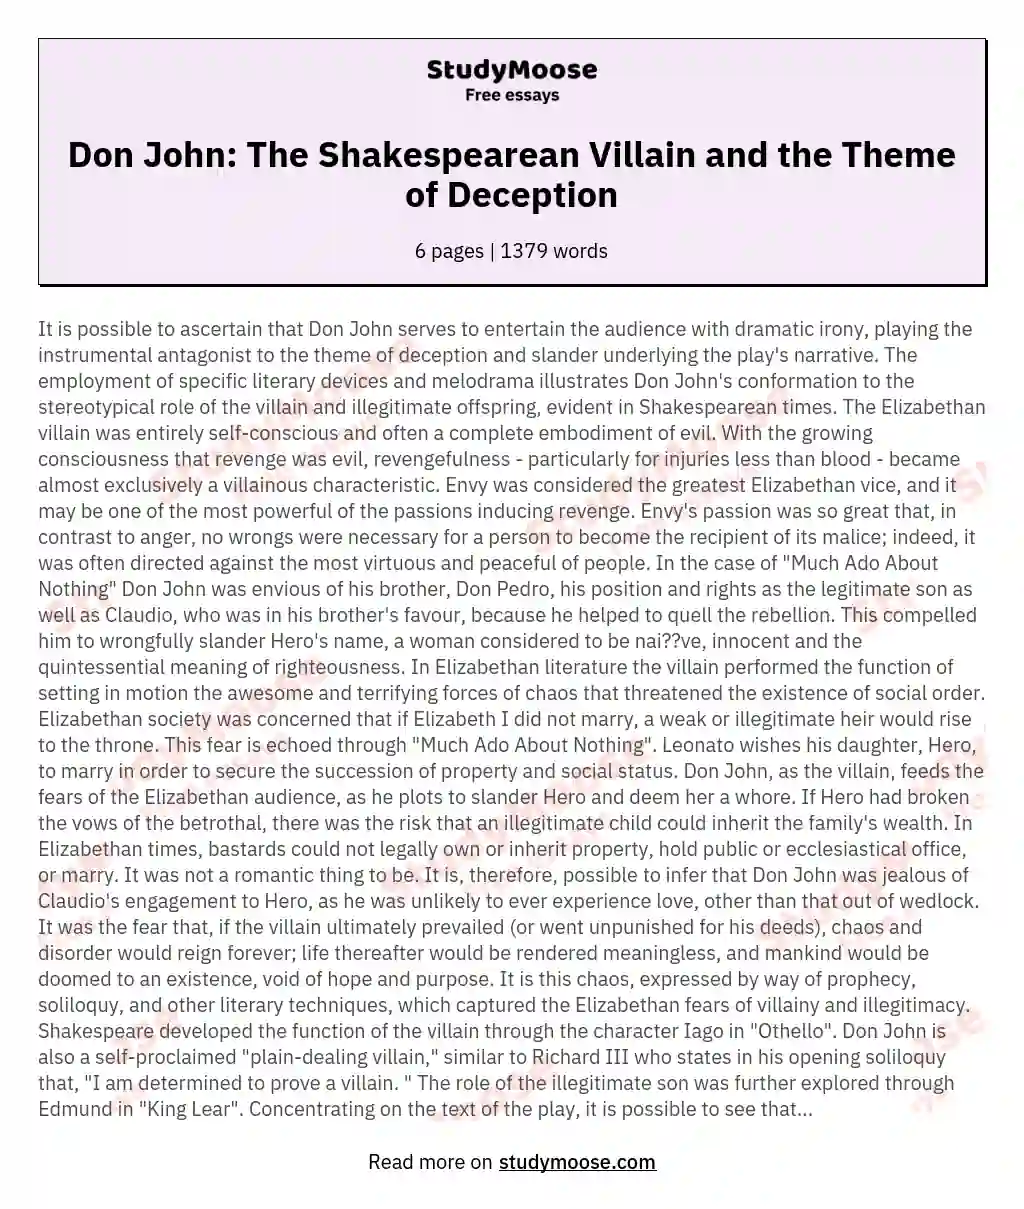 Don John: The Shakespearean Villain and the Theme of Deception essay